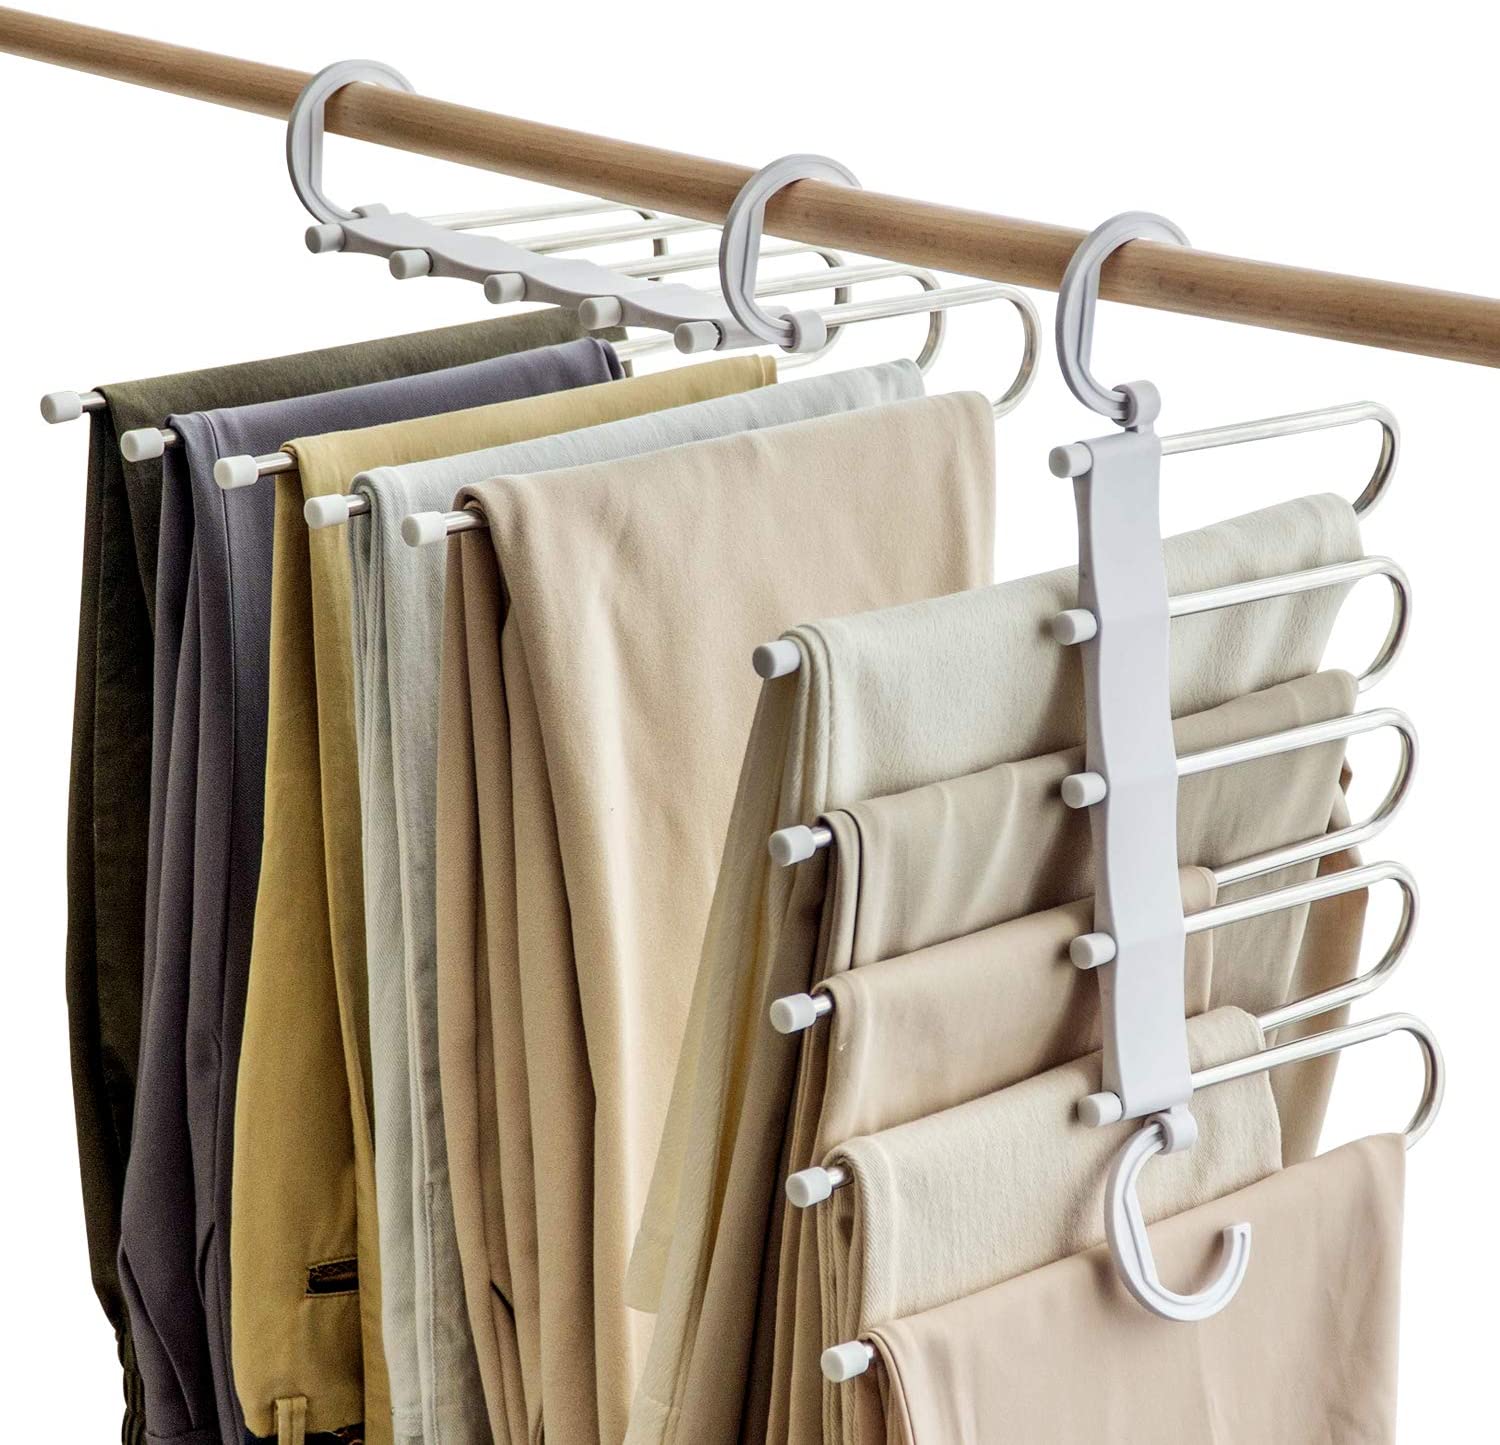 SOSOPIN Stainless Steel Lightweight Pants Hanger, 2-Pack